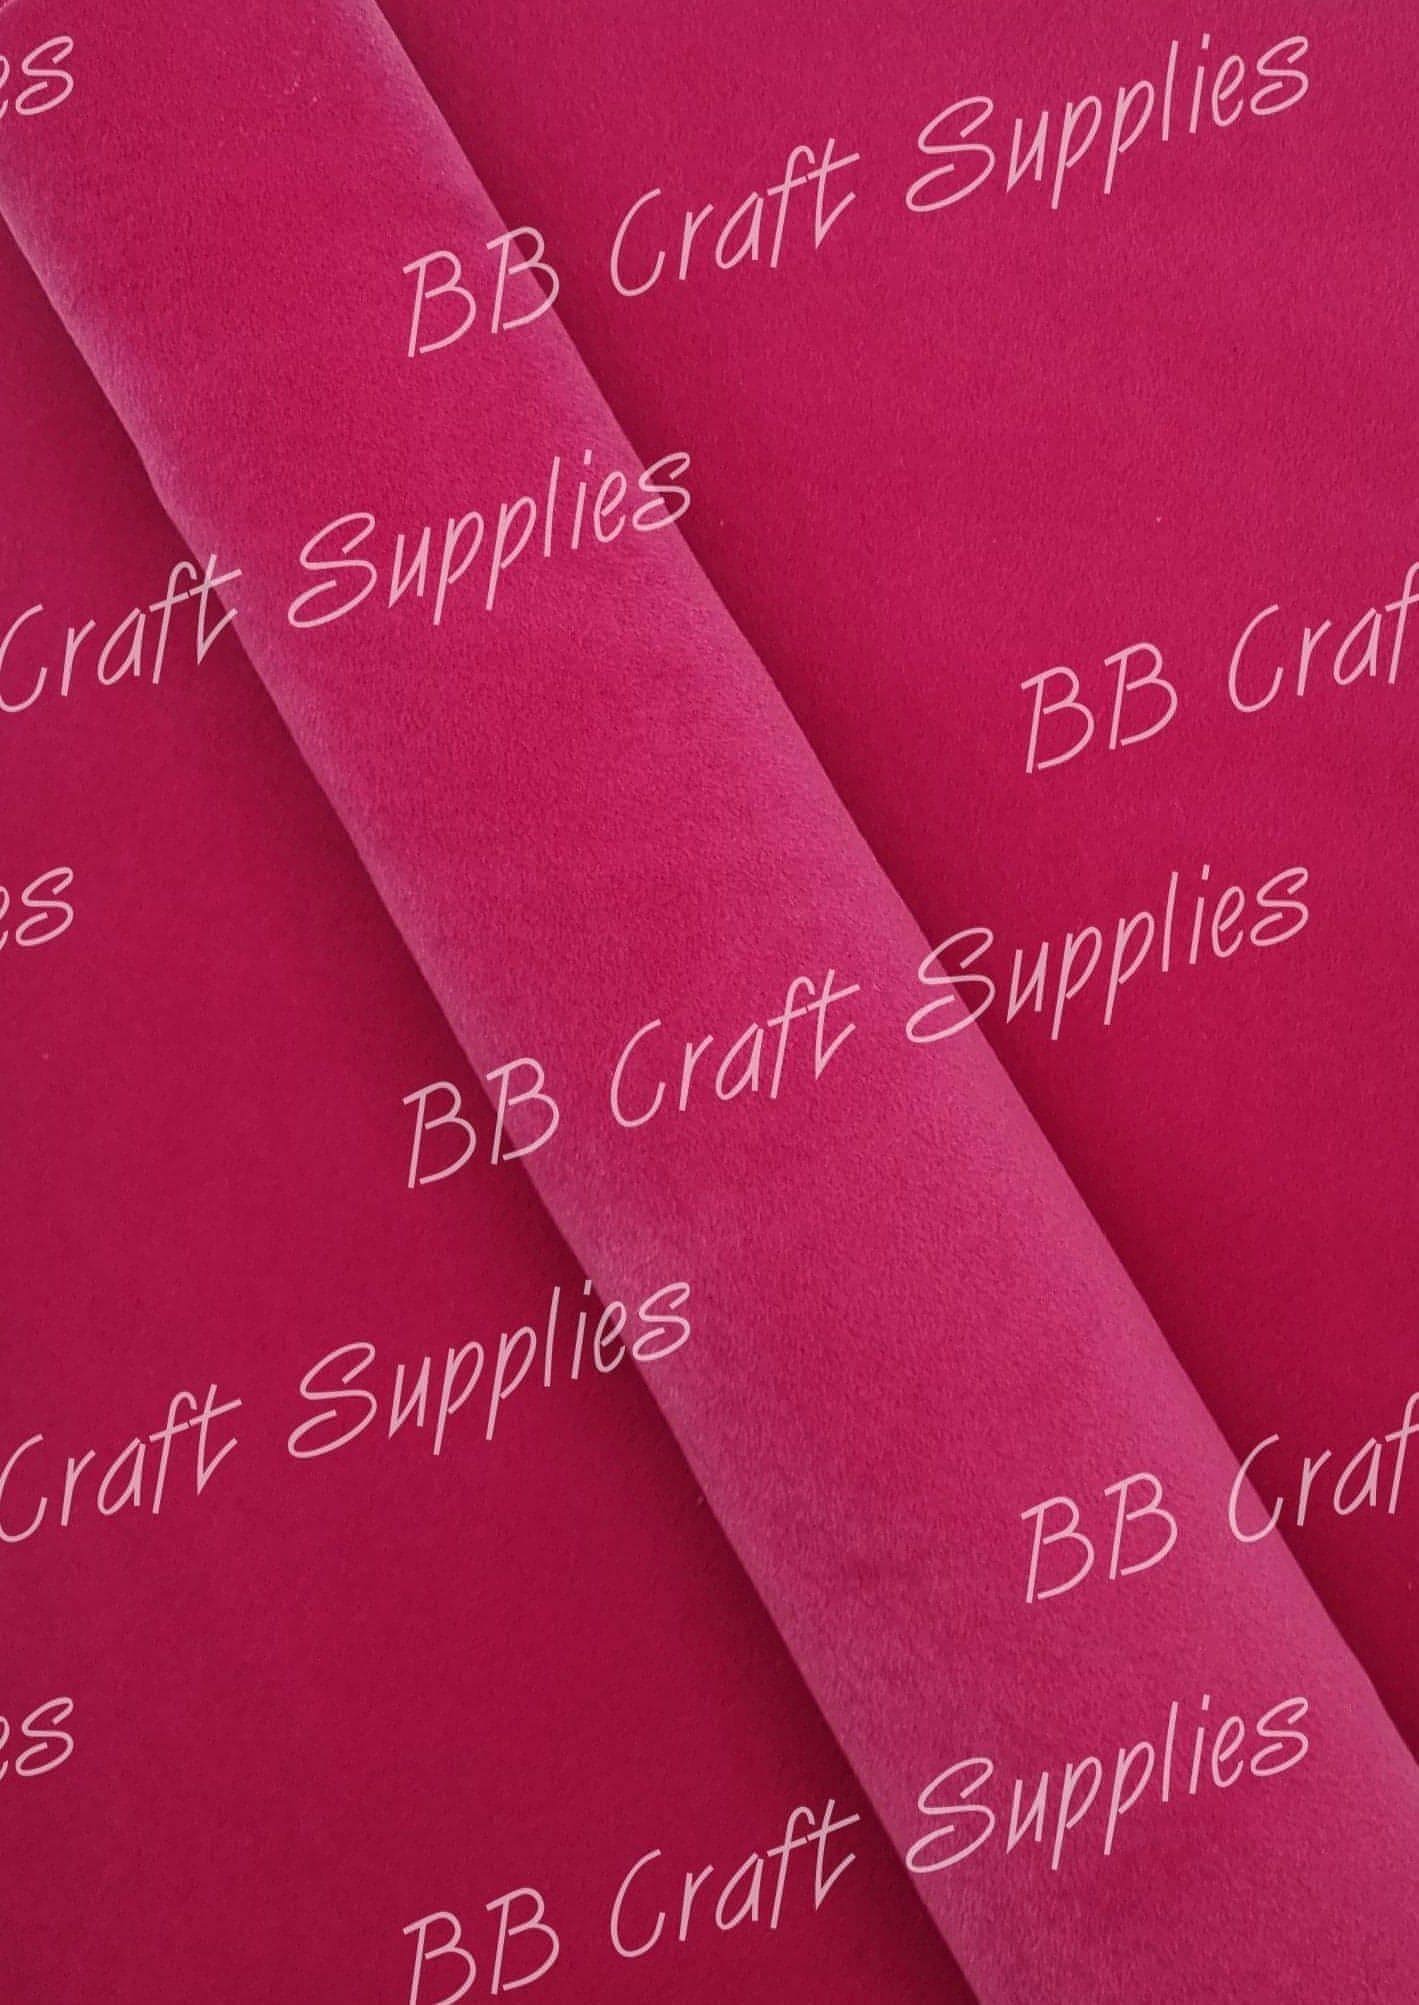 Premium Velvet Fabric - Hot Pink - crushed, soft, velvet - Bare Butler Faux Leather Supplies 